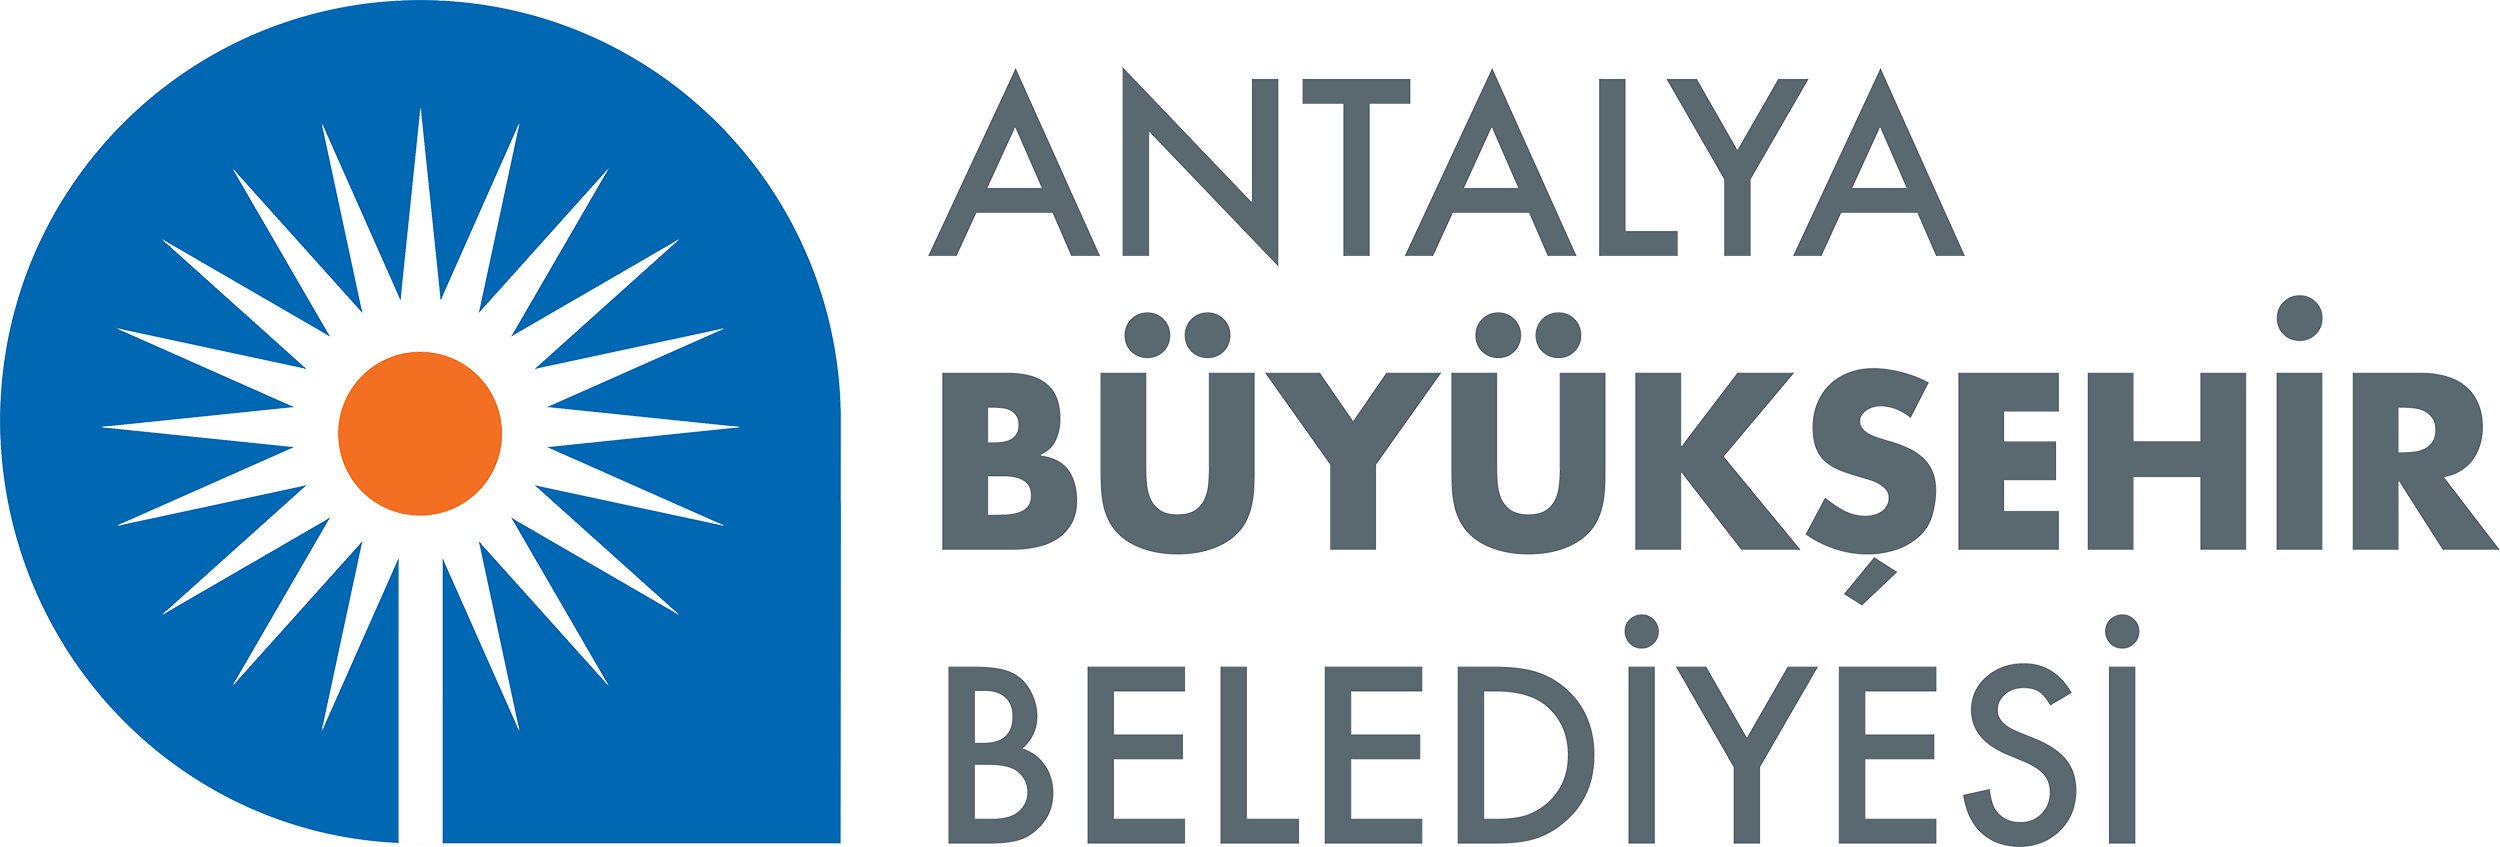 Antalya Metropolitan Municipality